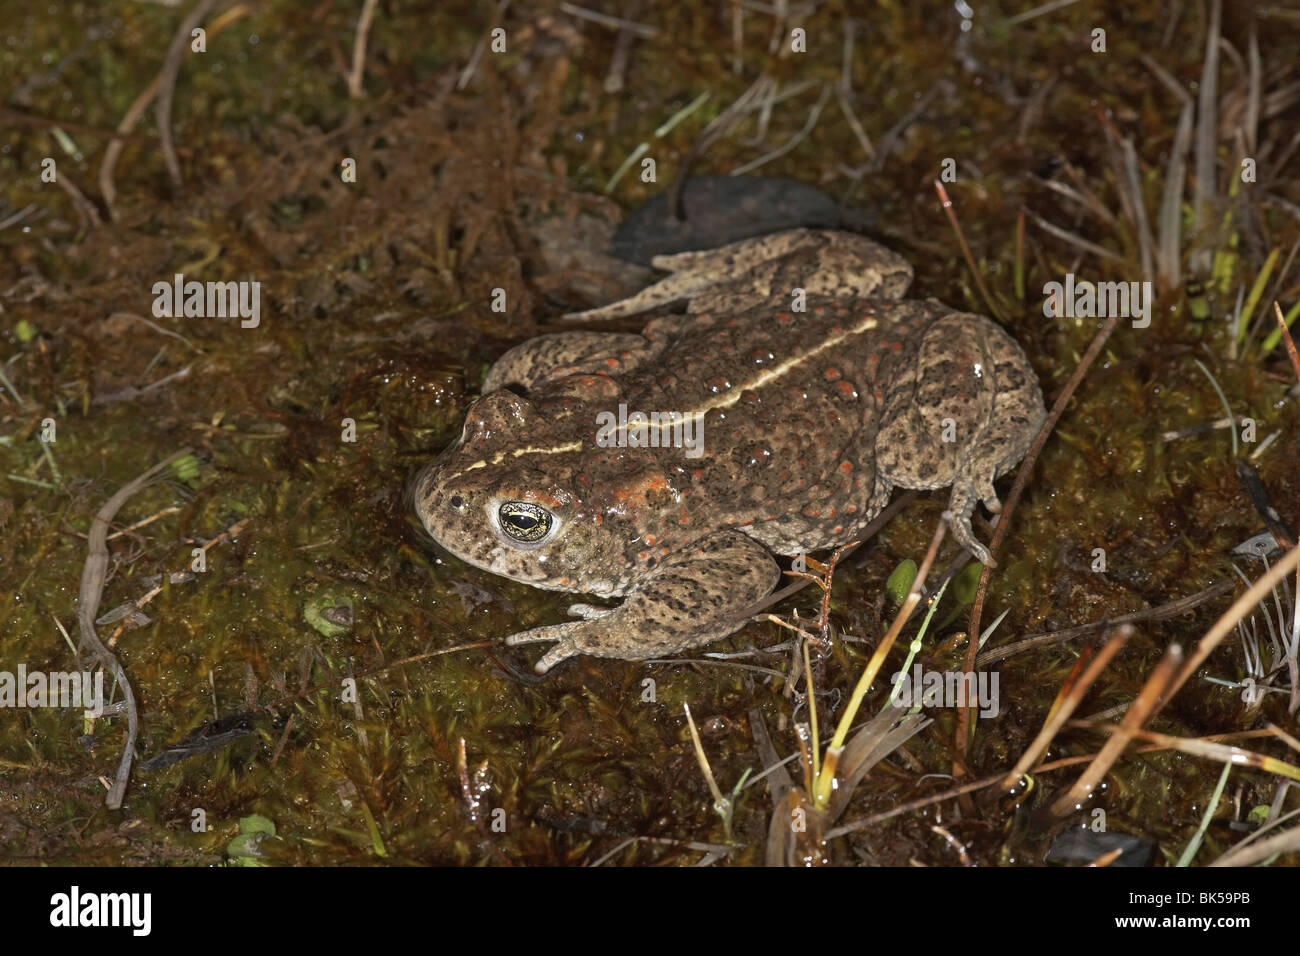 Natterjack toad, Bufo calamita Ainsdale sand dunes nature reserve, Merreyside, UK. Stock Photo